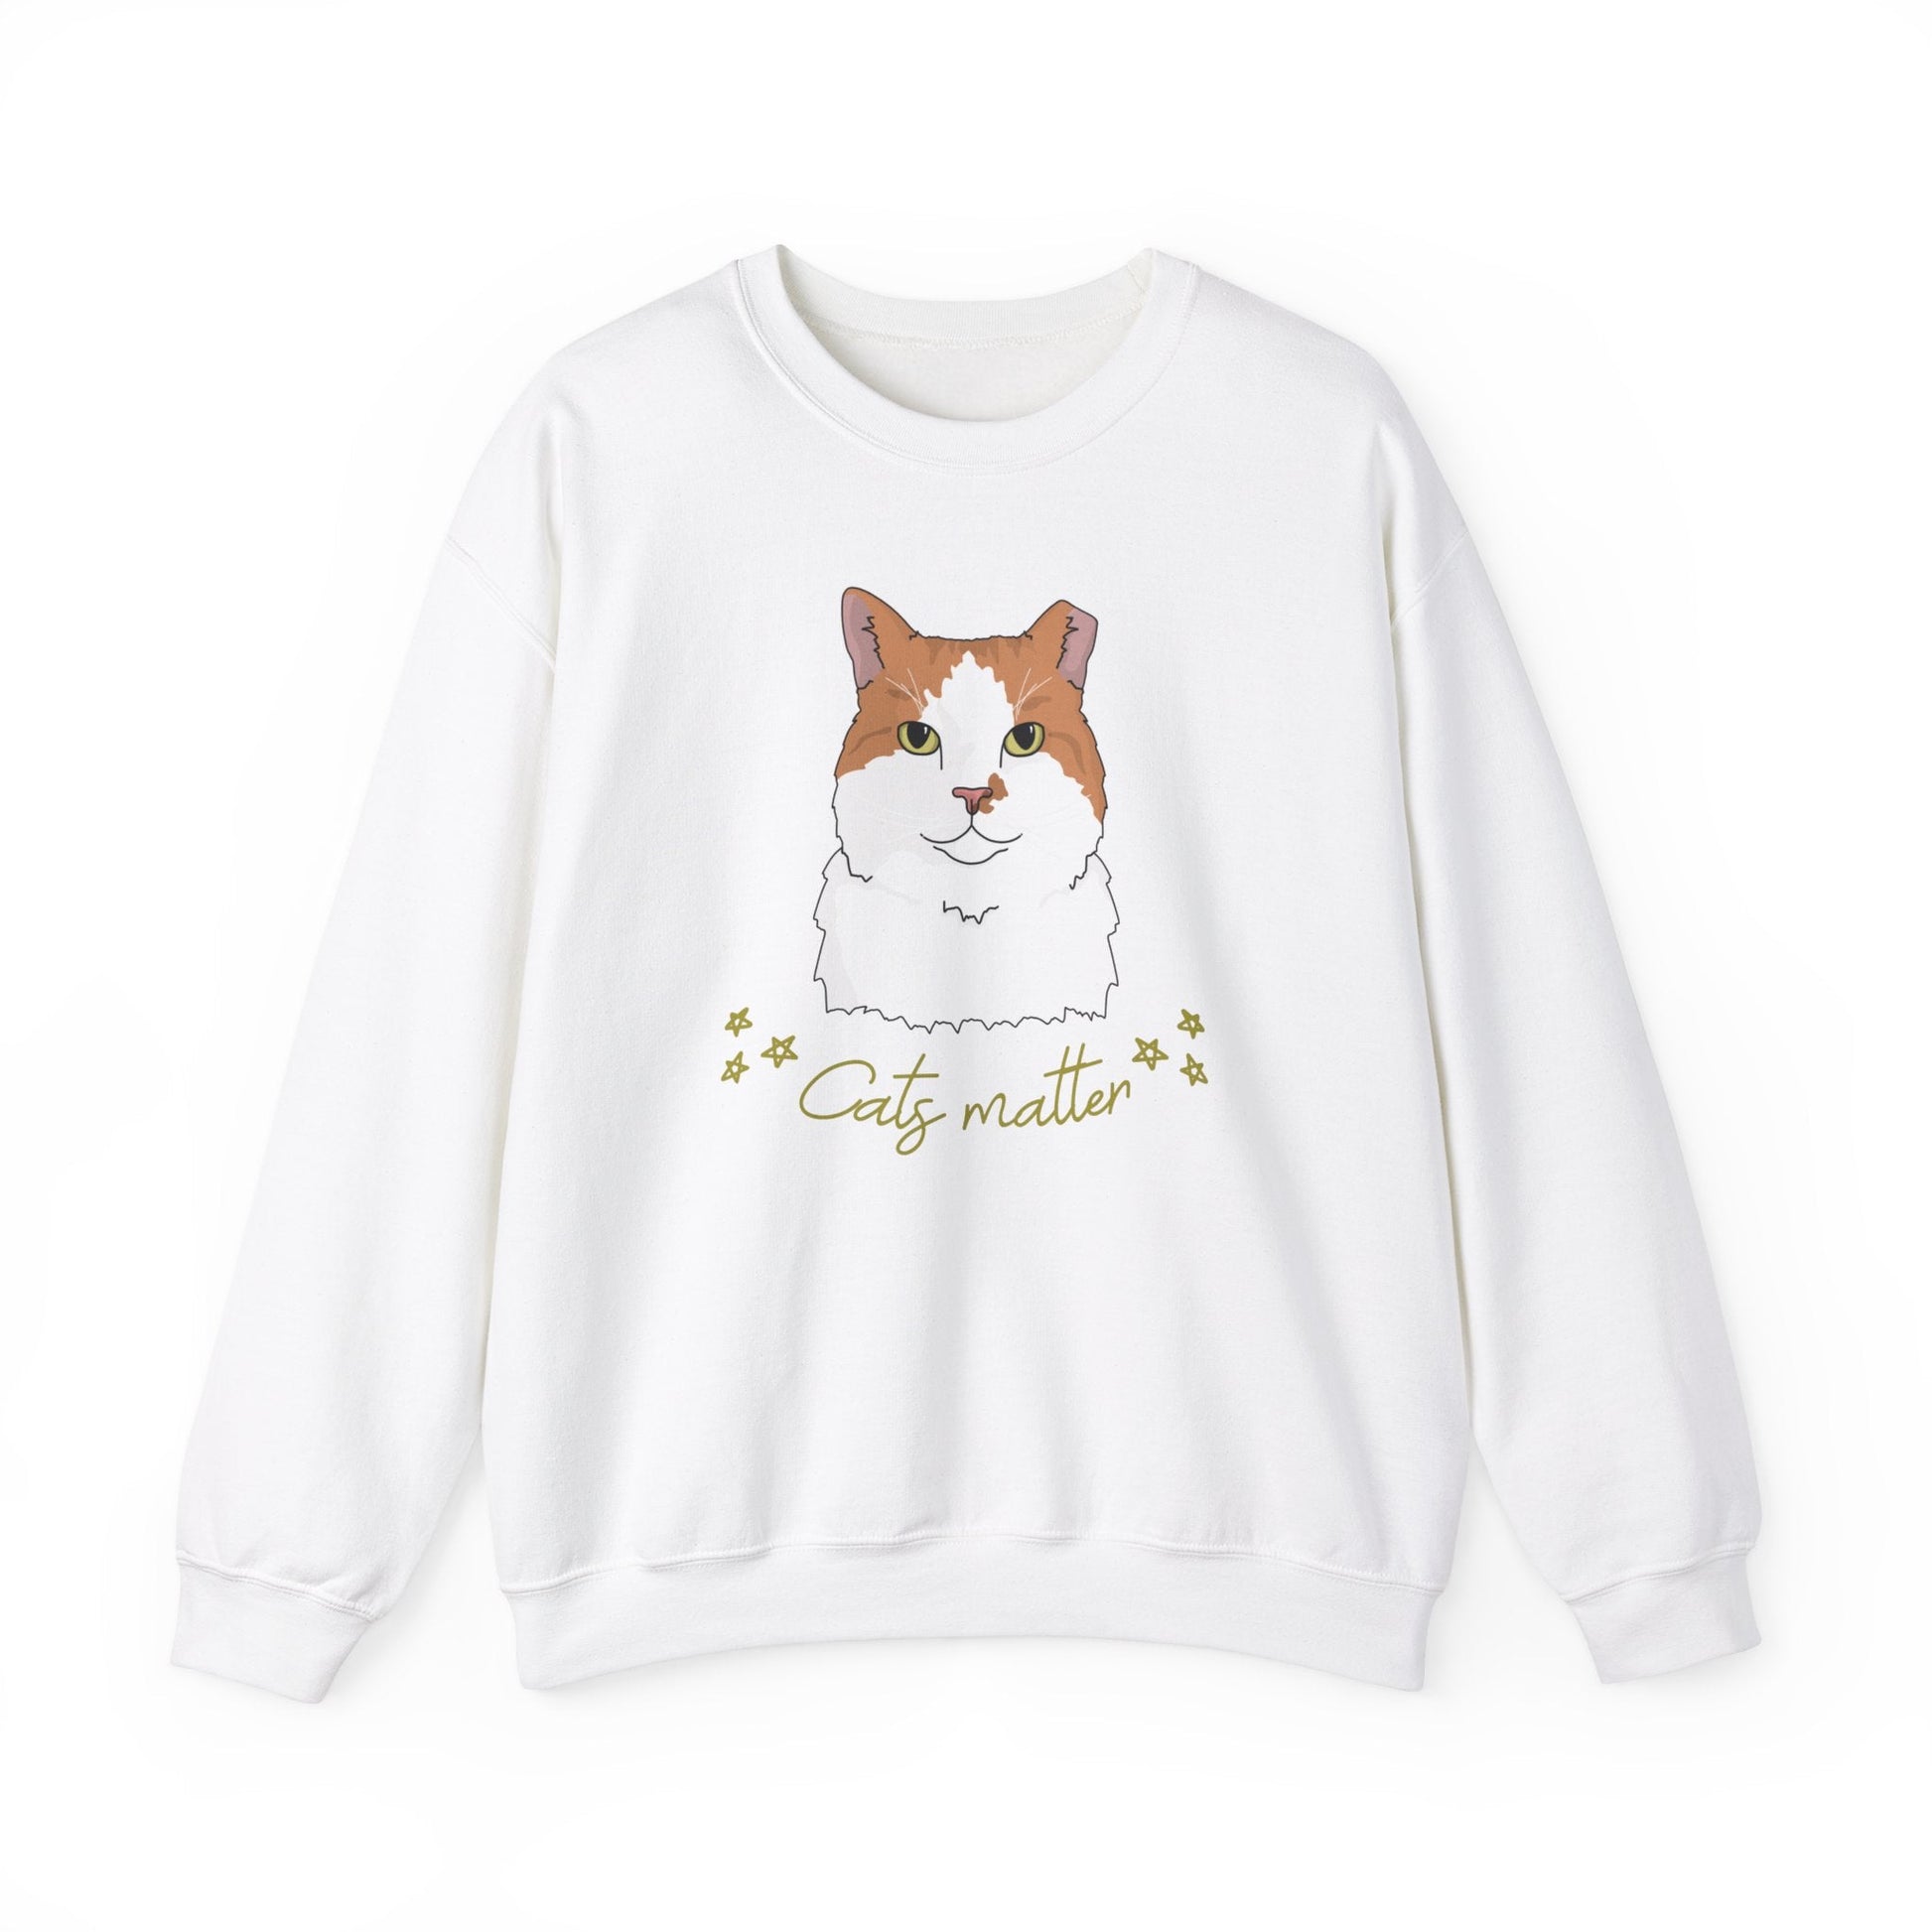 Cats Matter | Crewneck Sweatshirt - Detezi Designs-25112868854555328236